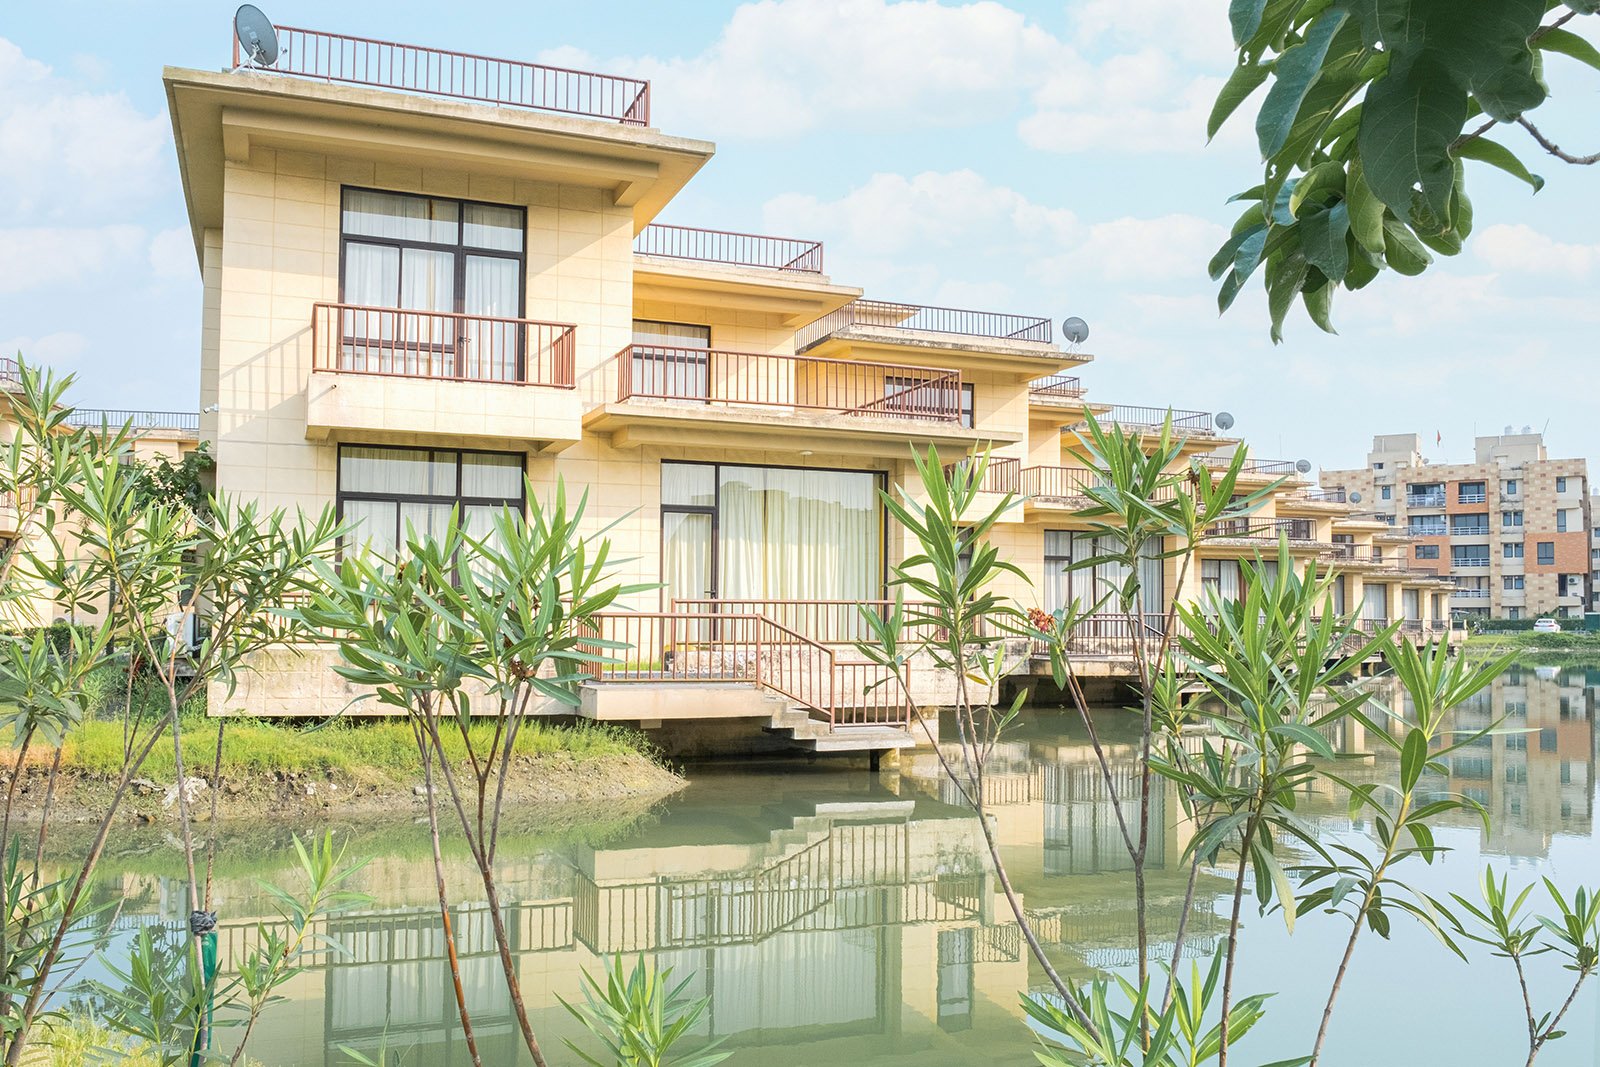  RAJARHAT – Golf villa & boat house for sale in Vedic Village GreenTech city